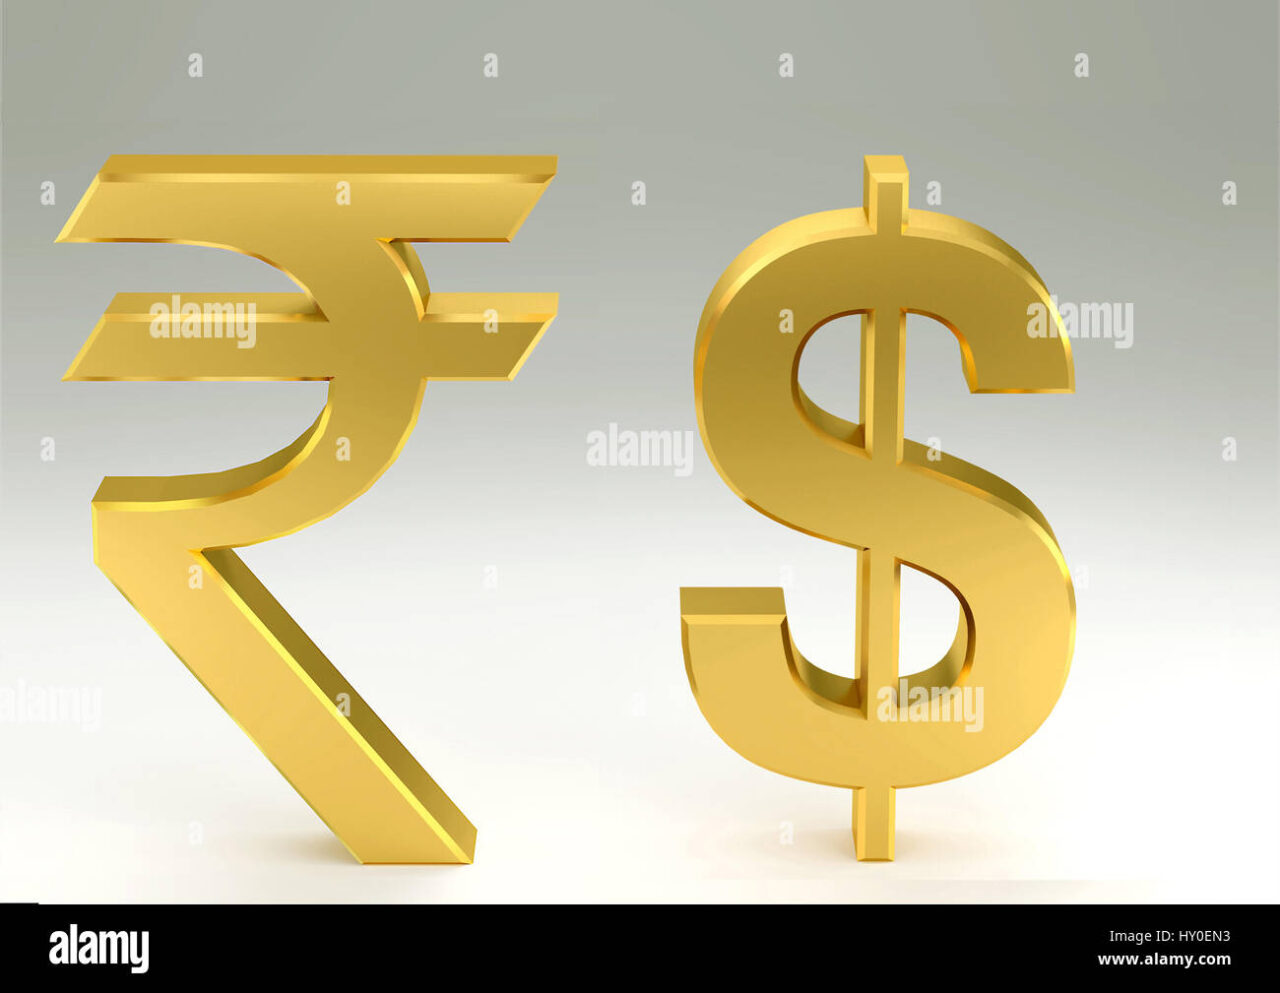 indian-rupee-vs-us-dollar-symbols-HY0EN3-1280x993.jpg